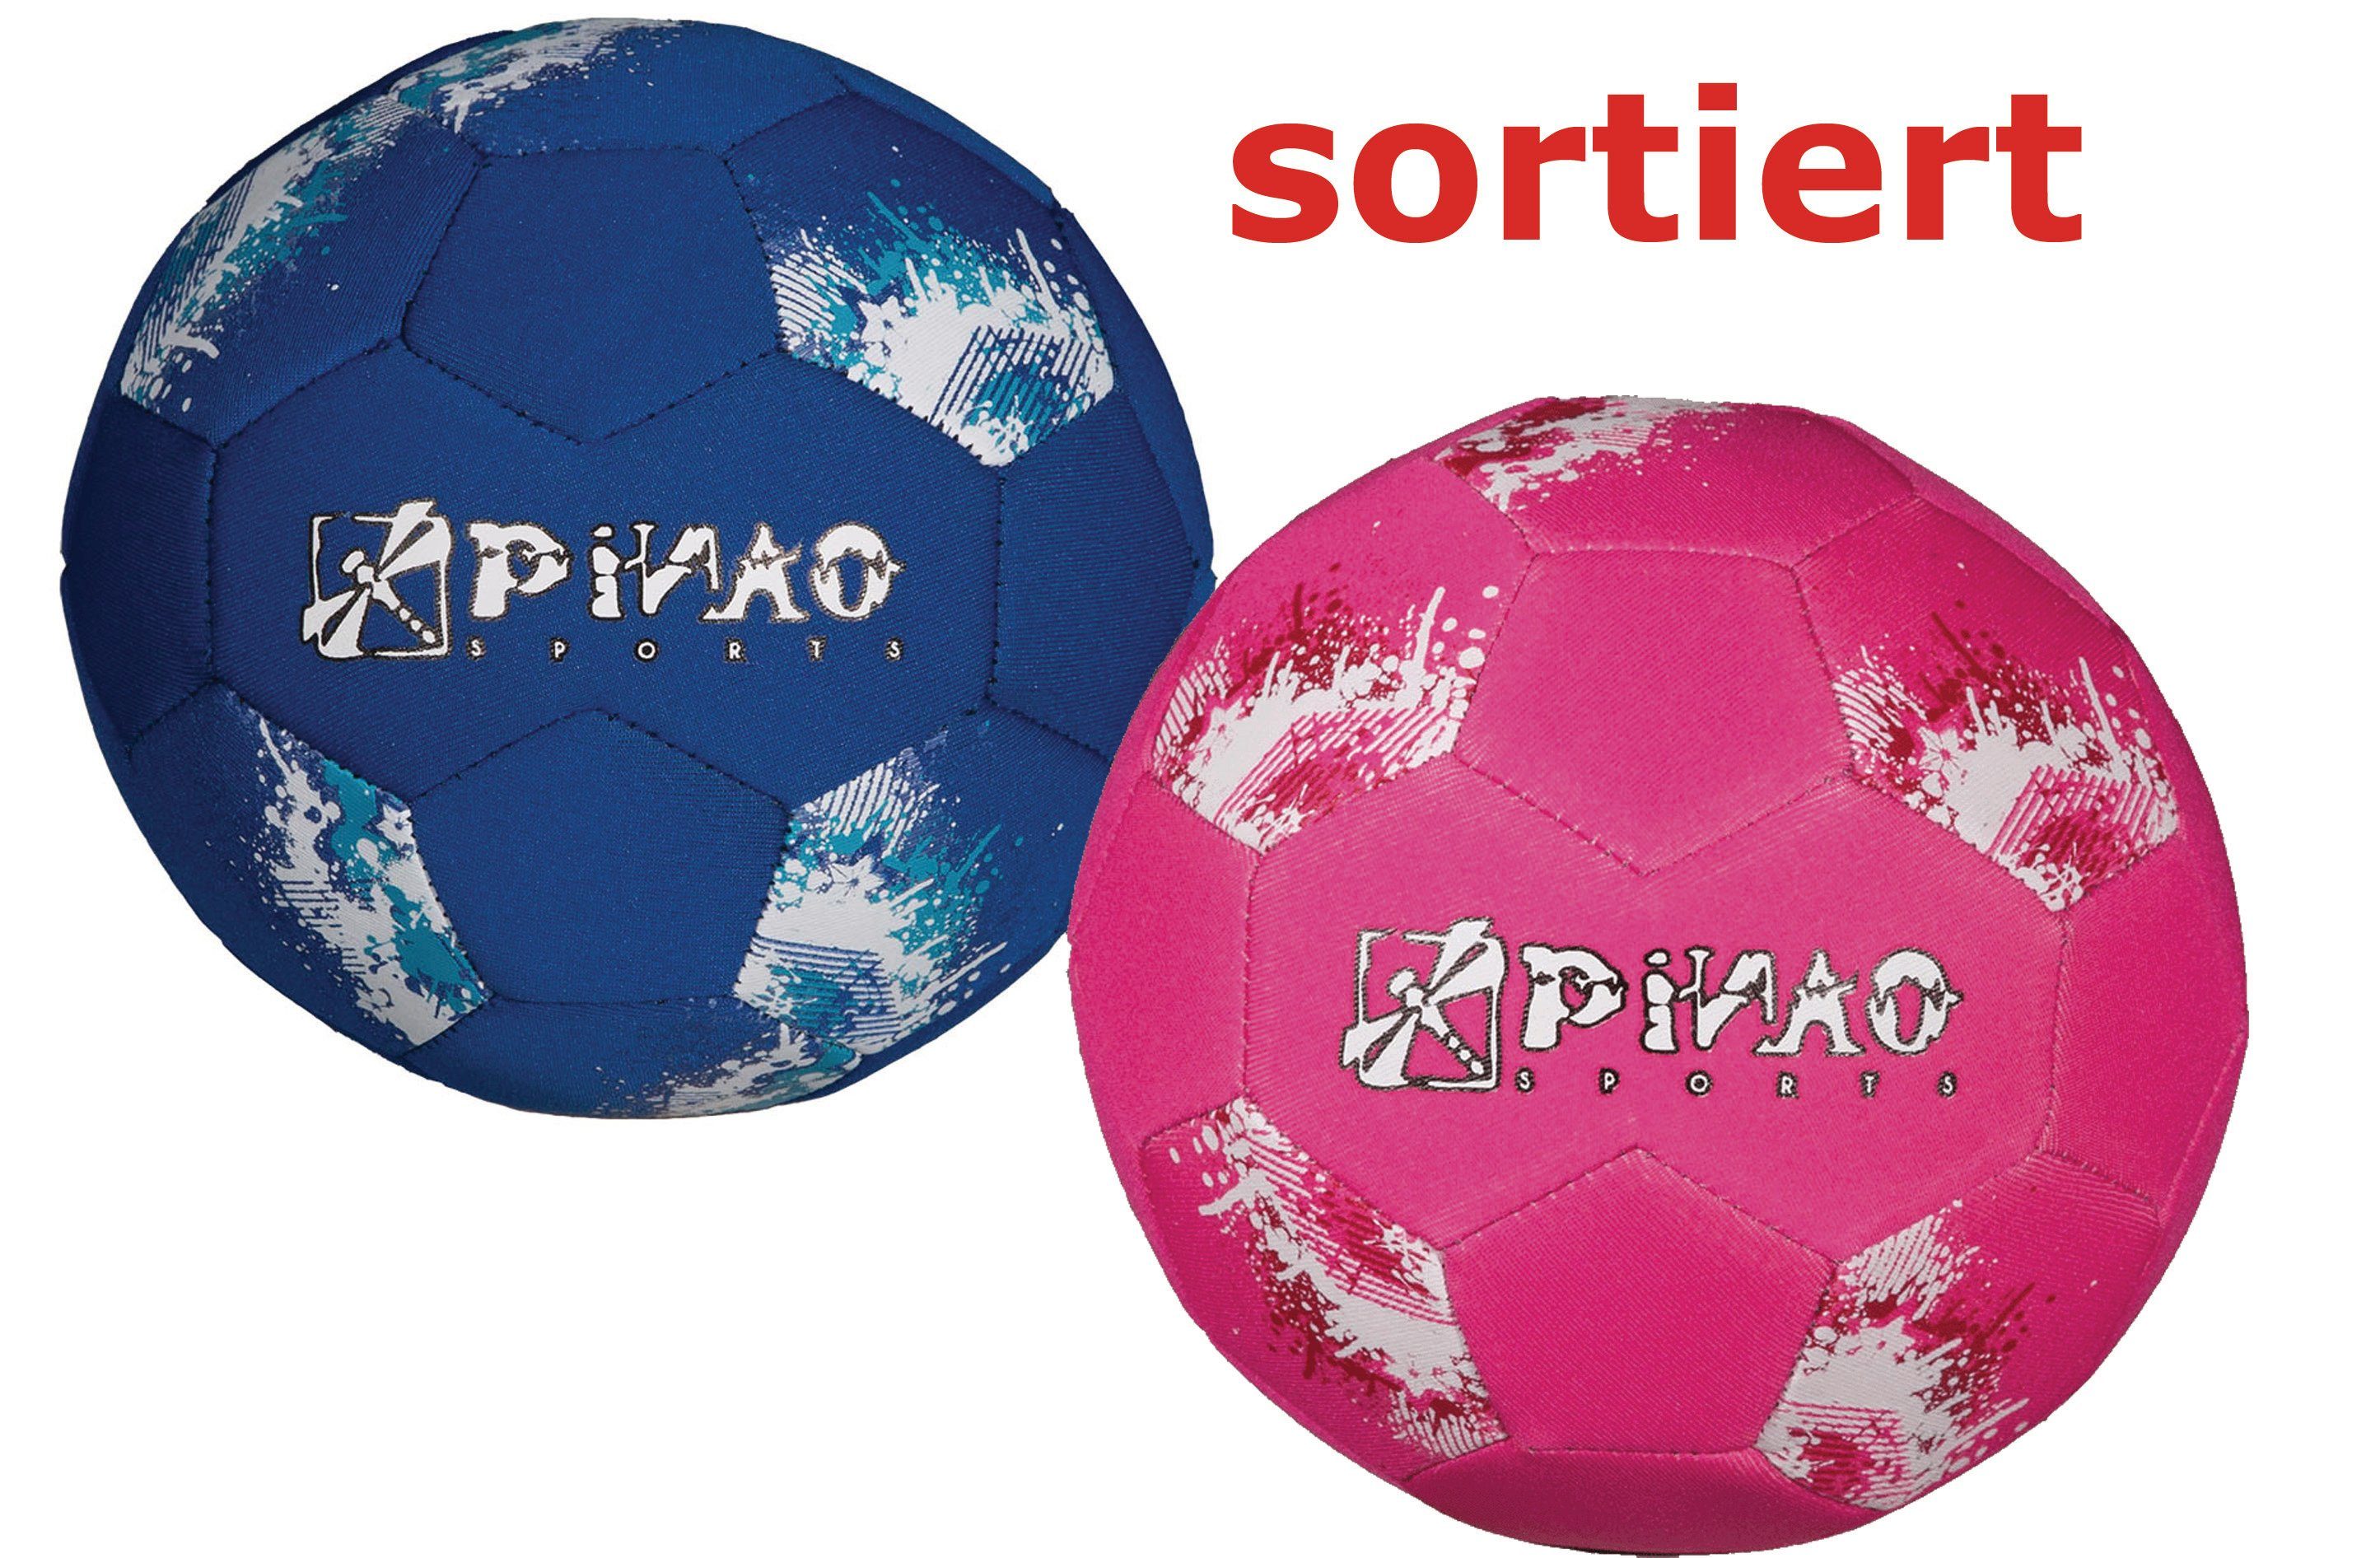 PiNAO 38225 Neopren Mini-Fußball 